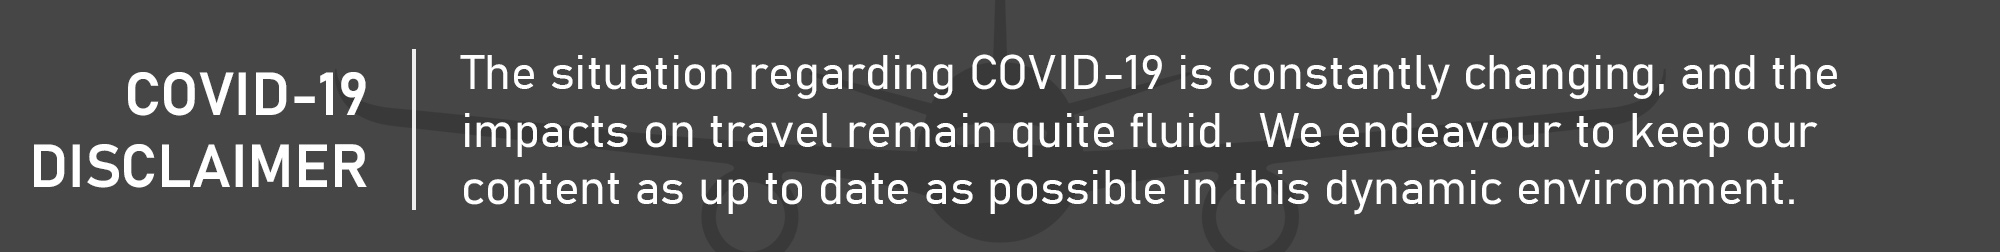 COVID-19 Content Disclaimer